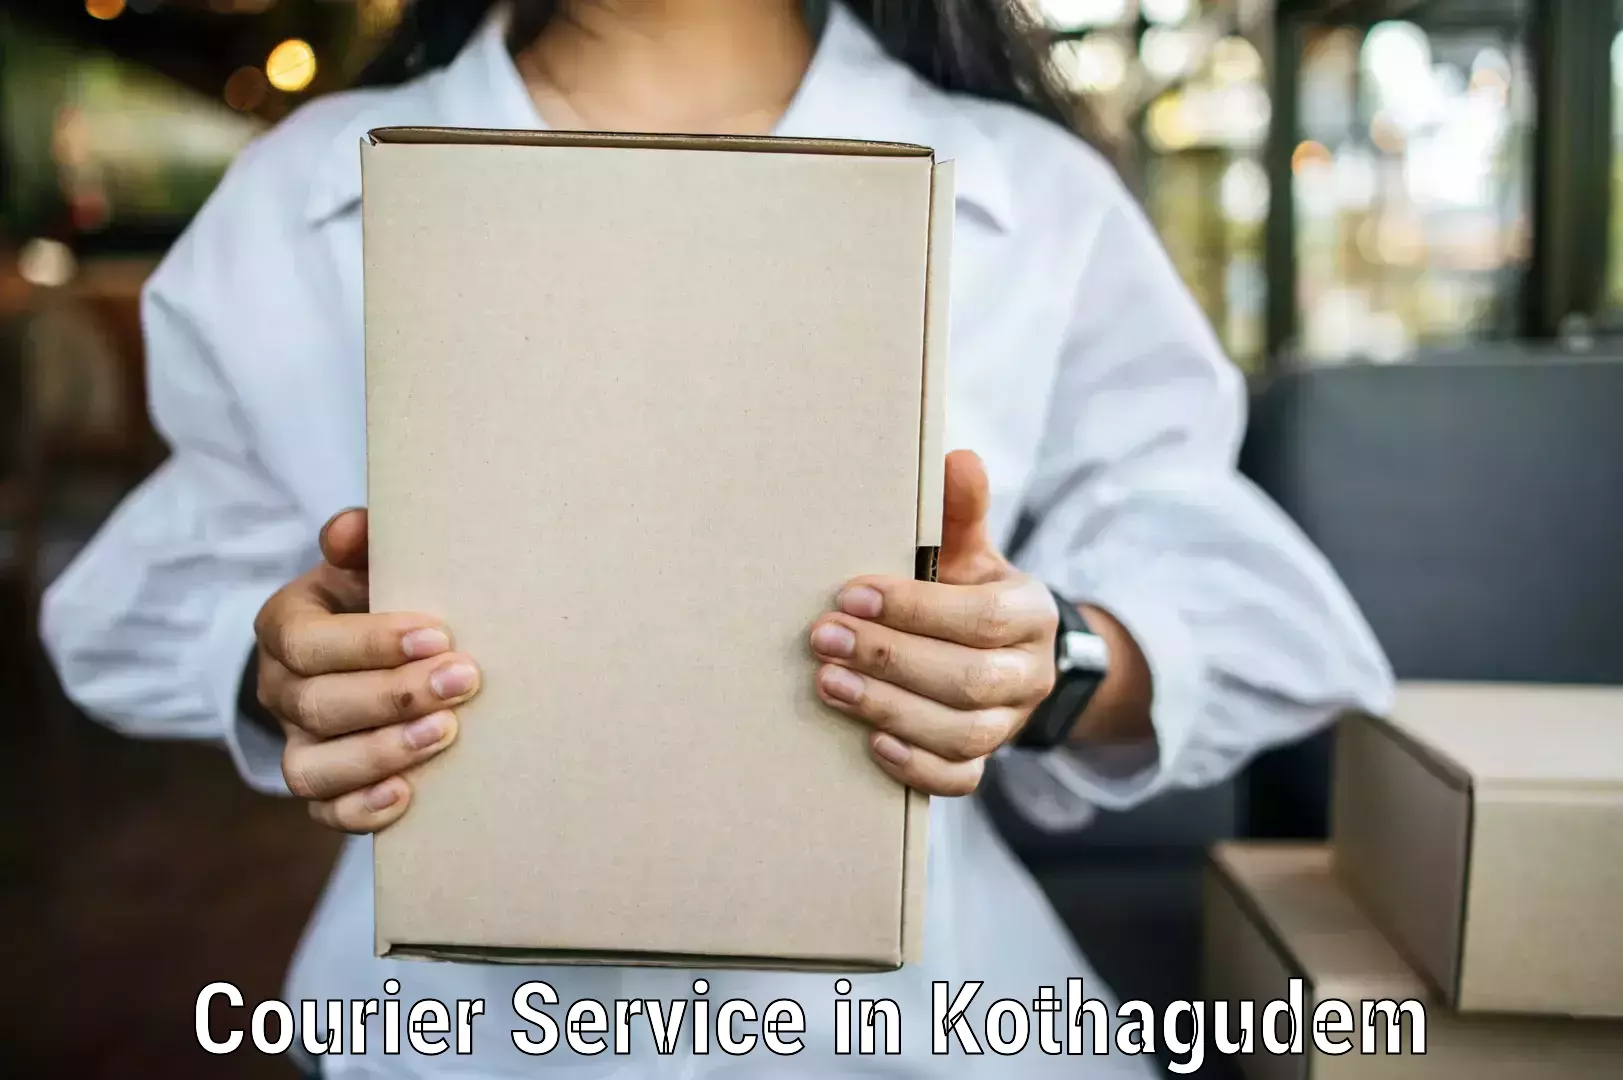 Urban courier service in Kothagudem